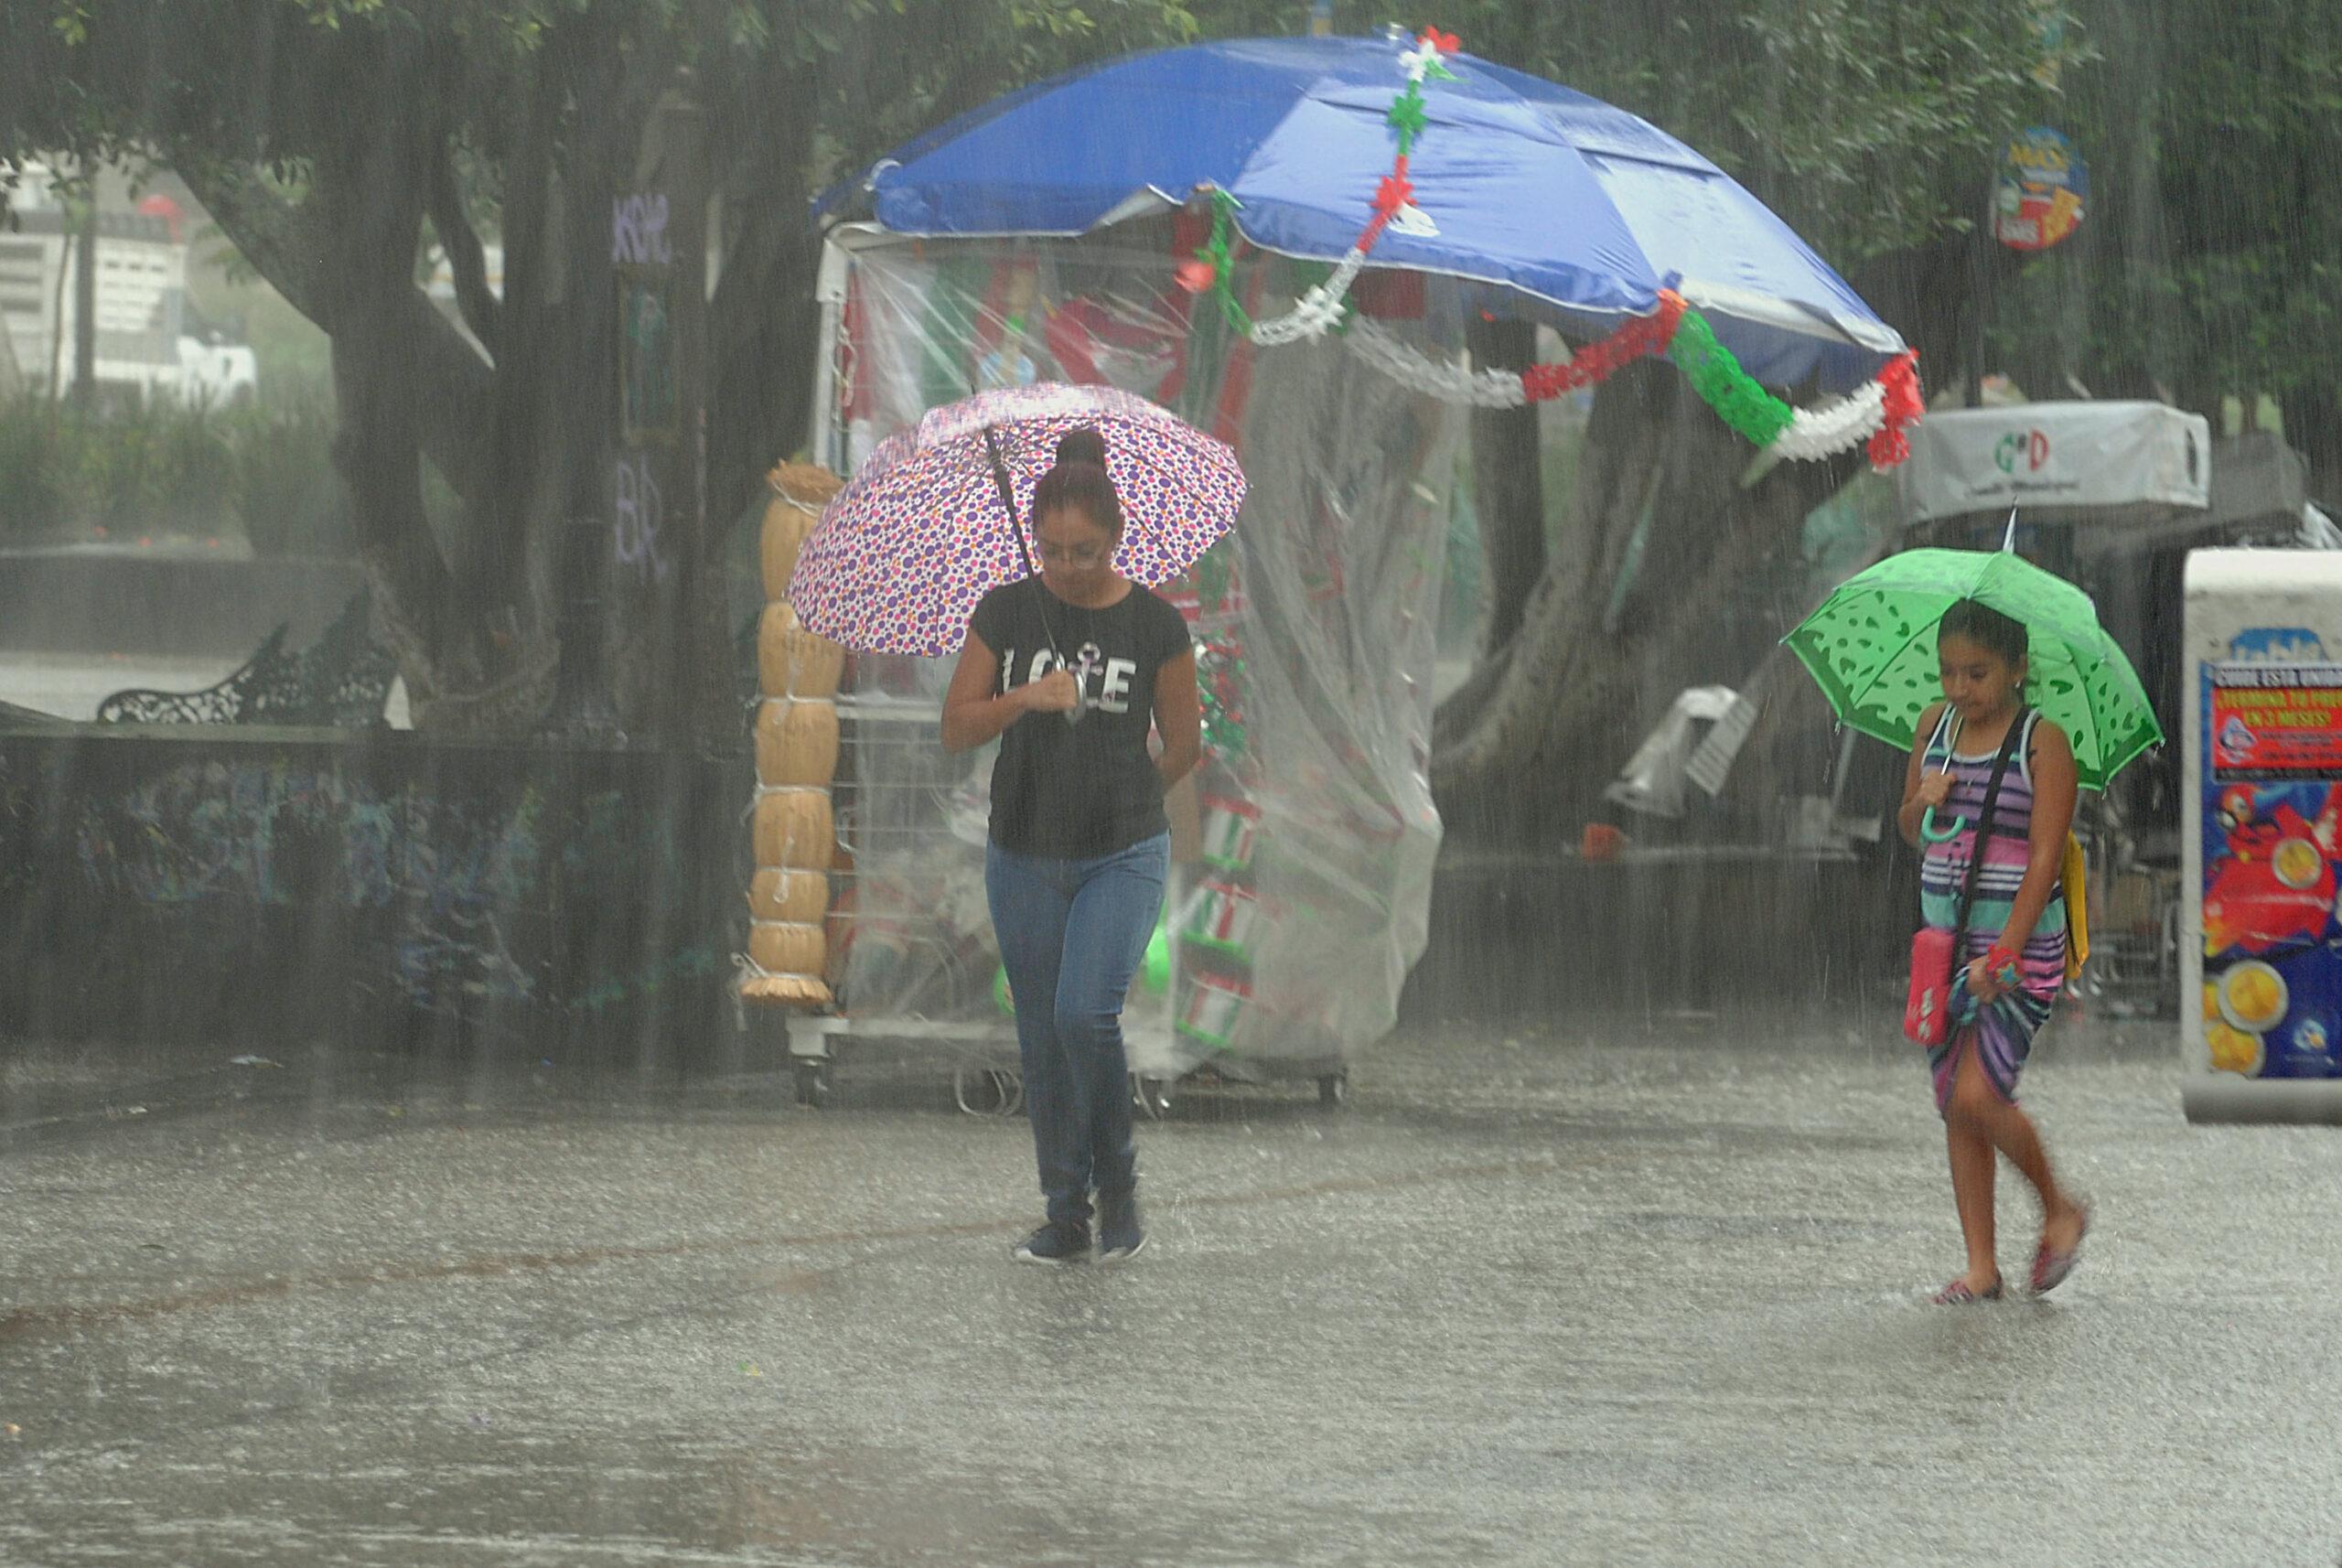 Le llega refuerzo al frío: se prevén lluvias fuertes en al menos 23 estados de México